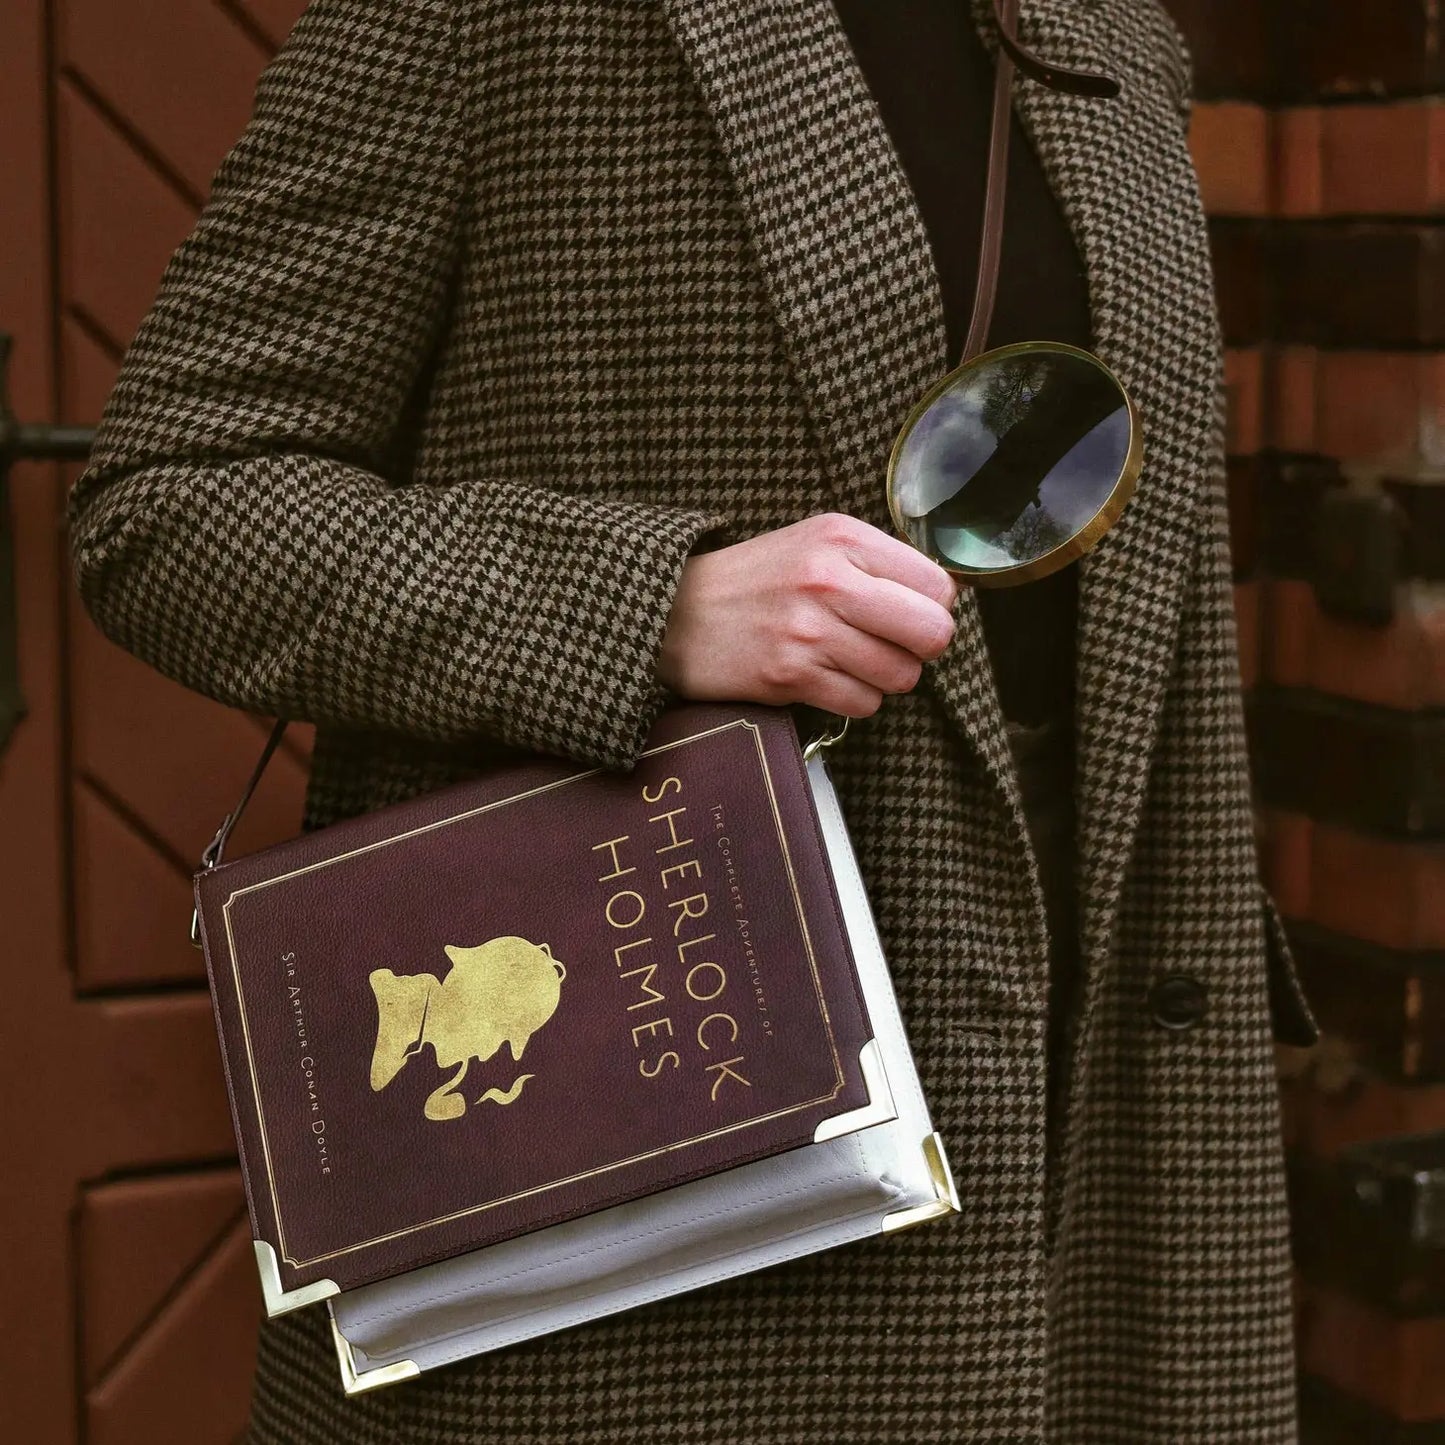 Sherlock Holmes Silhouette Book Crossbody Vegan Handbag